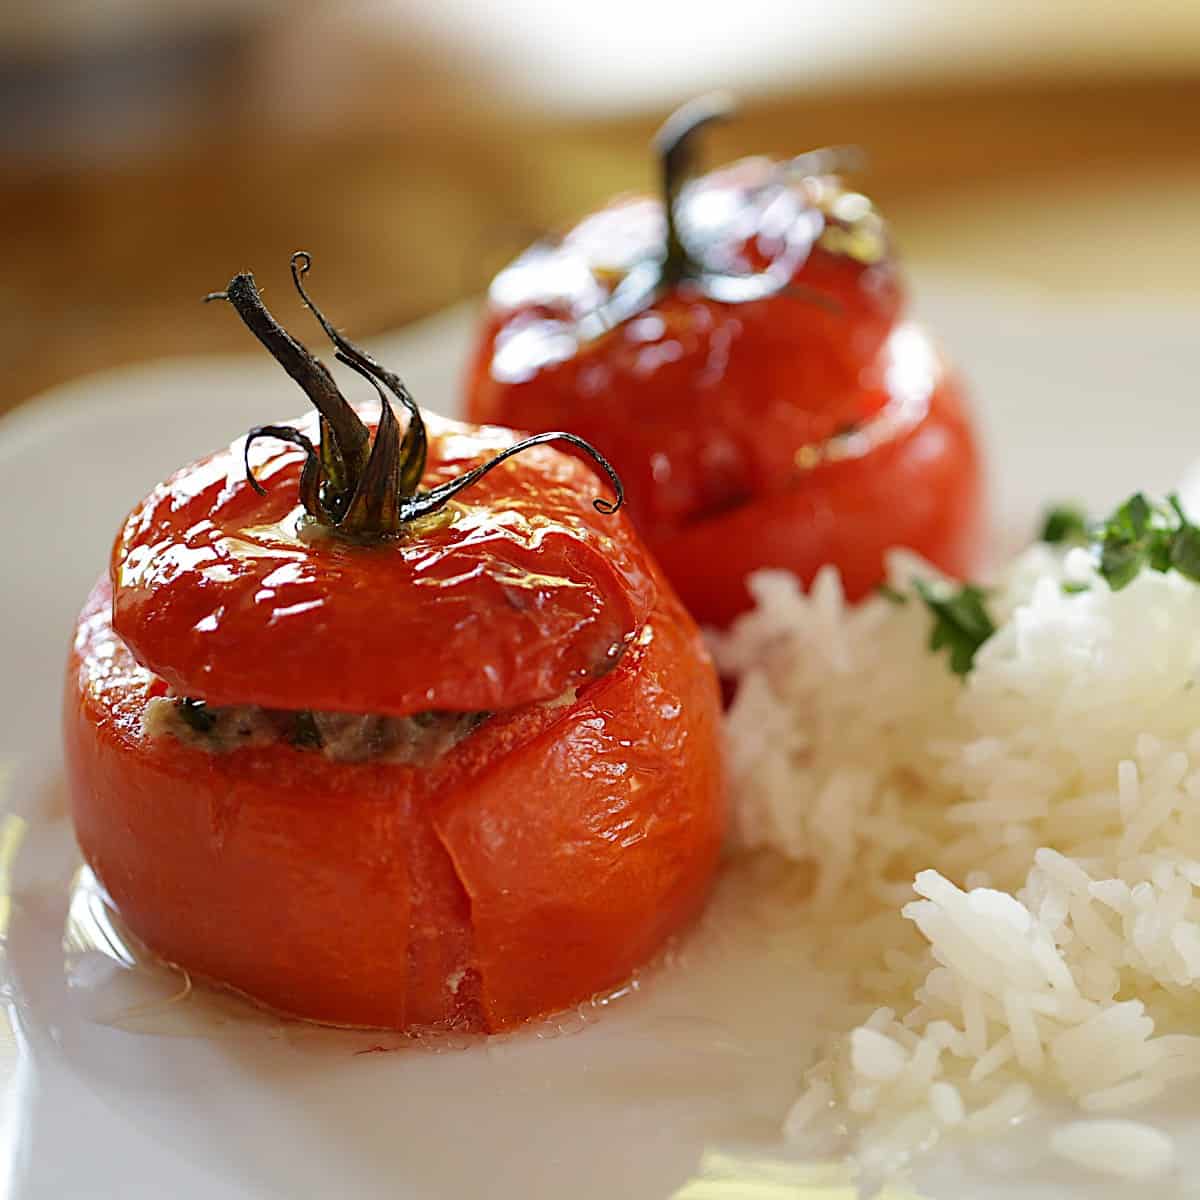 Beth's Tomates Farcies Recipe (Stuffed Tomatoes)